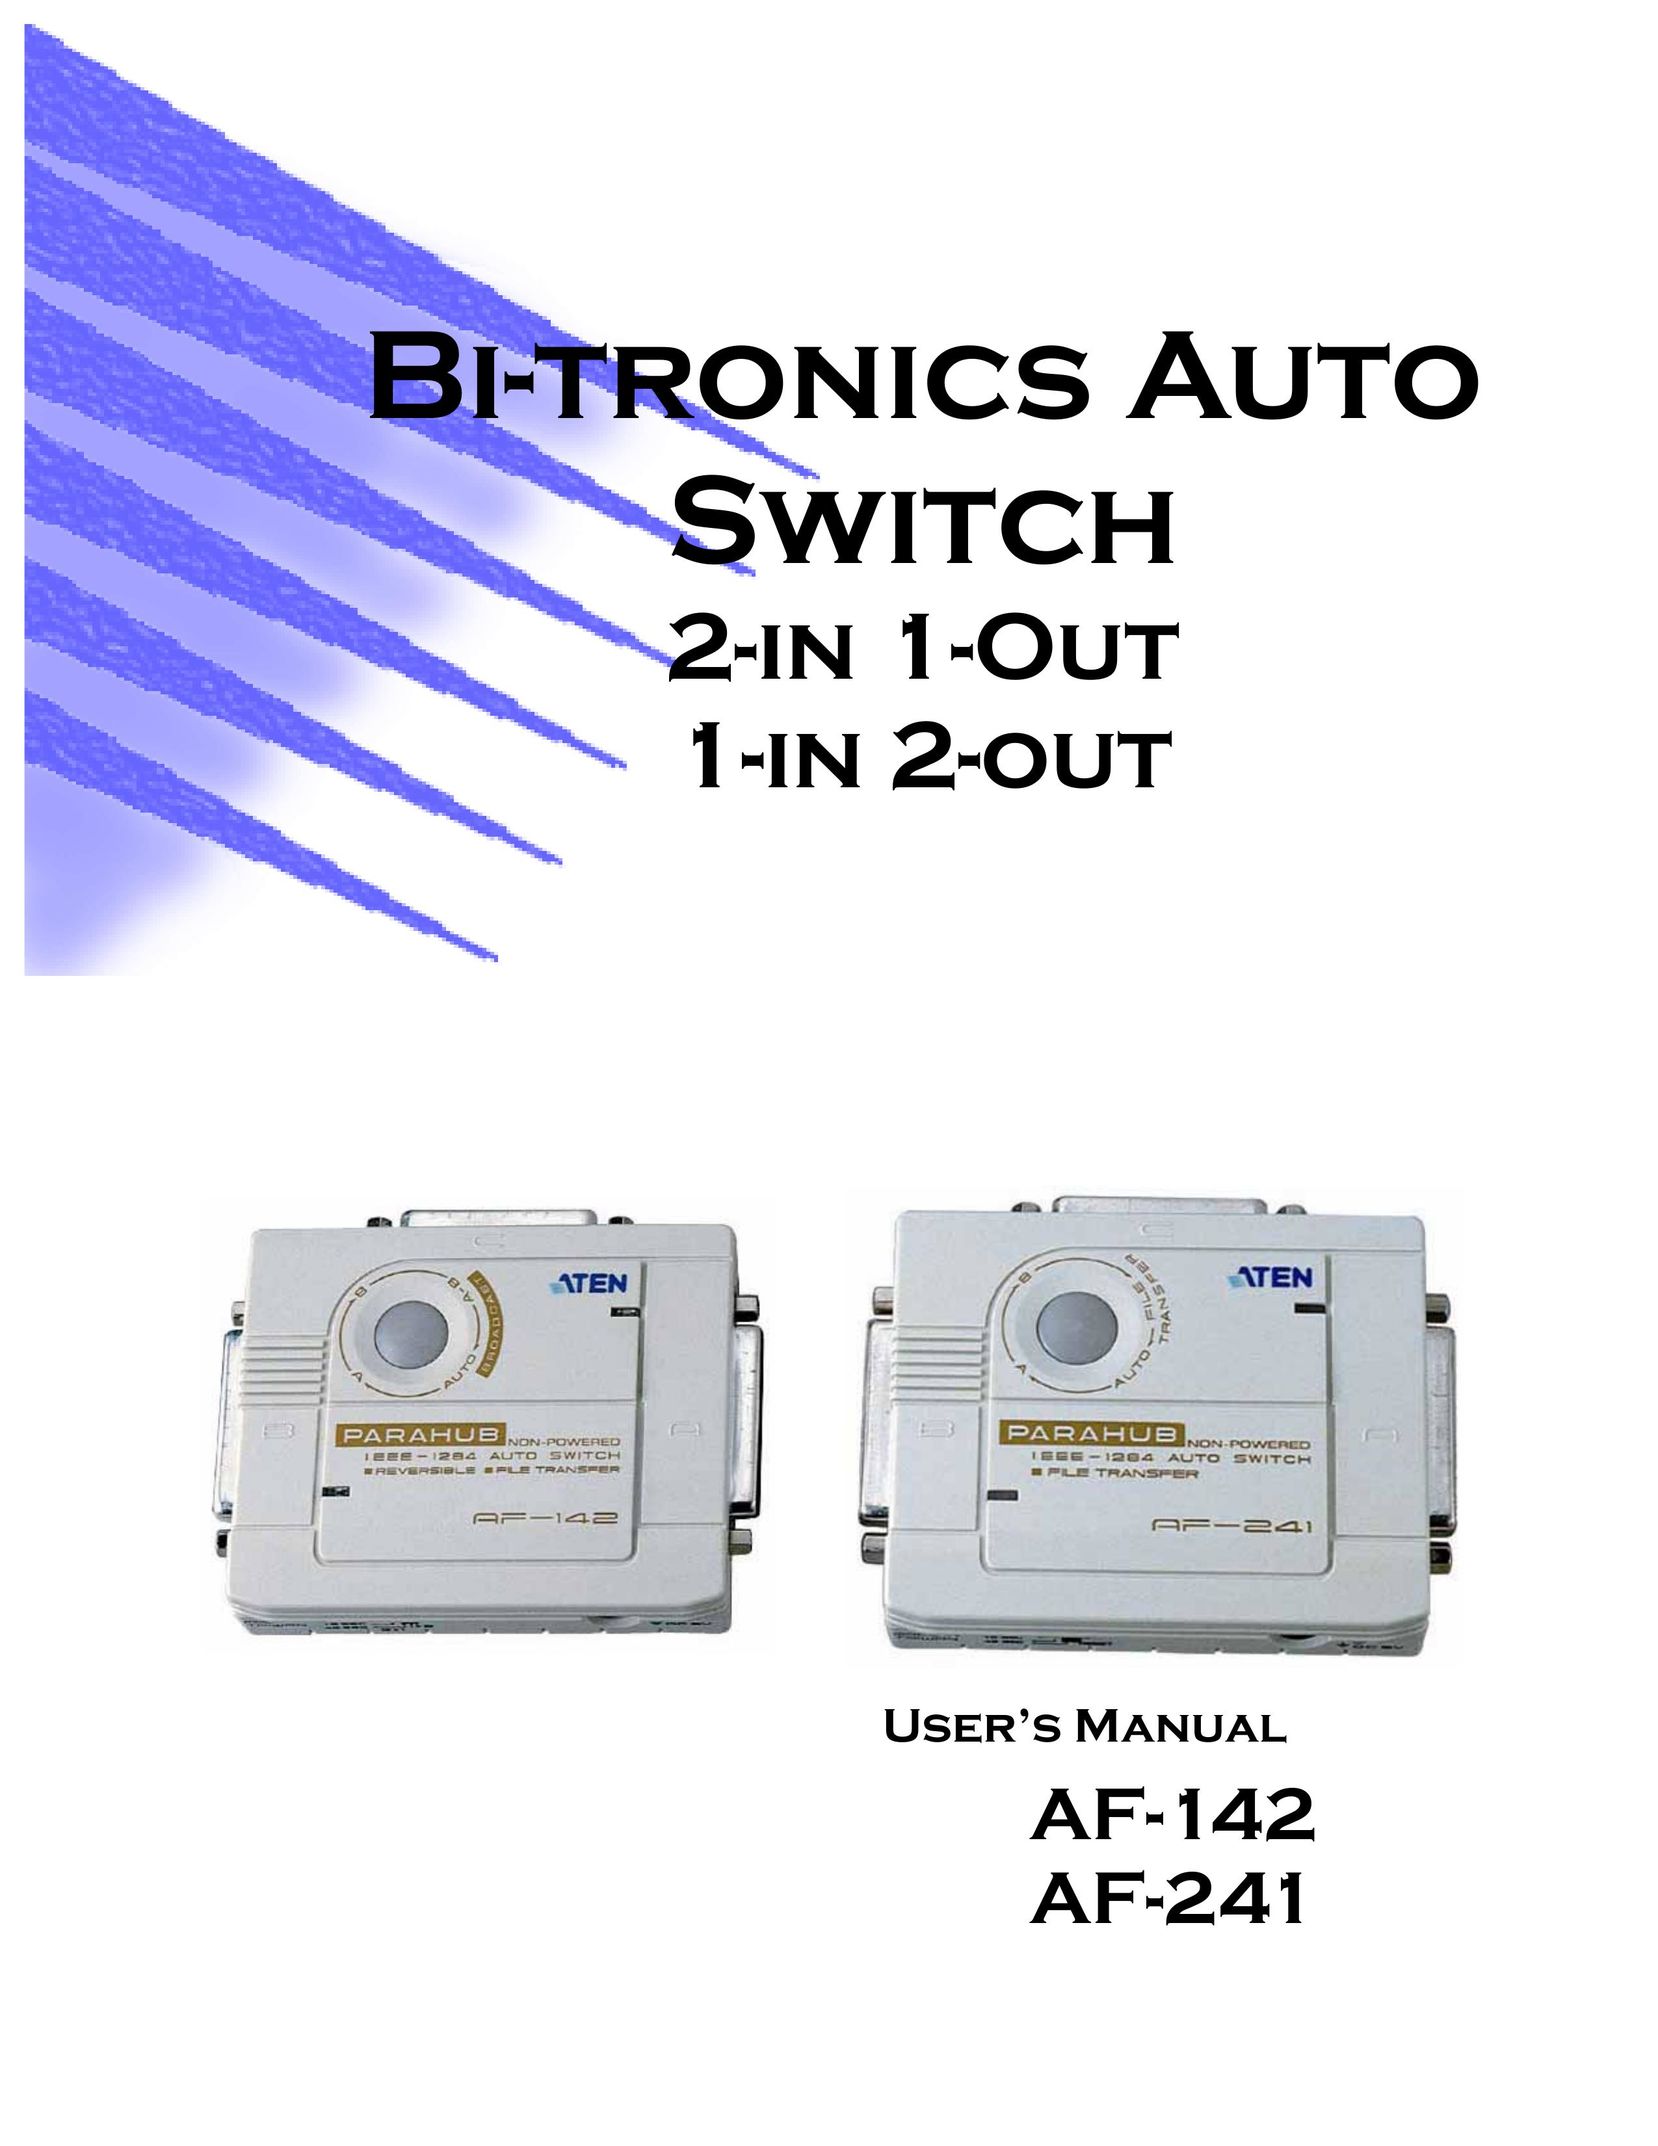 ATEN Technology Bi-tronics Auto Network Card User Manual